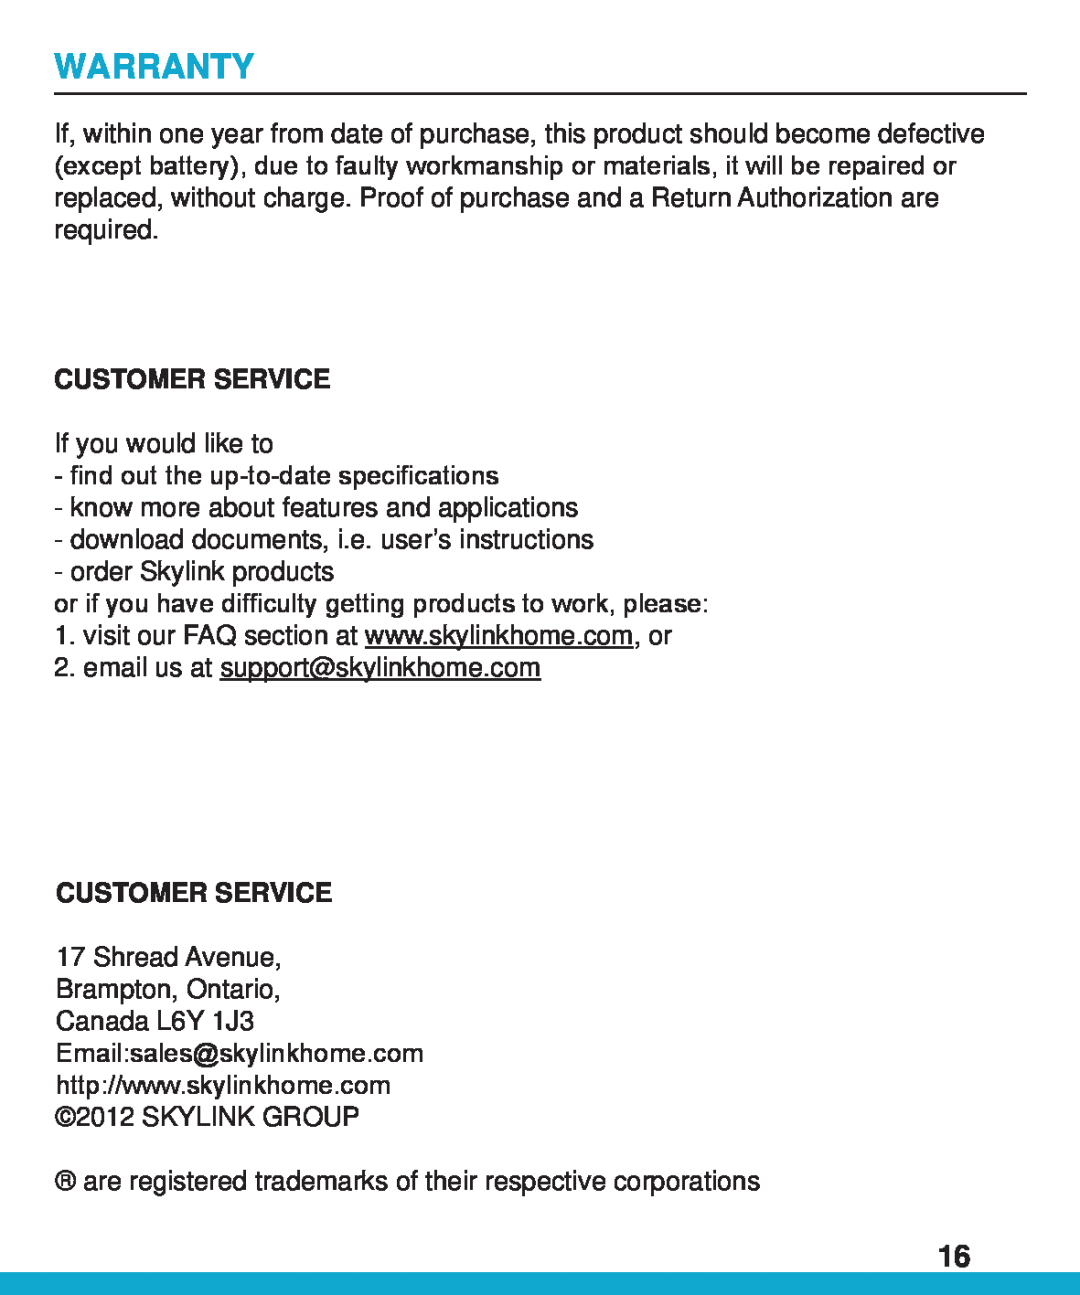 SkyLink wc-400 user manual Warranty, Customer Service 